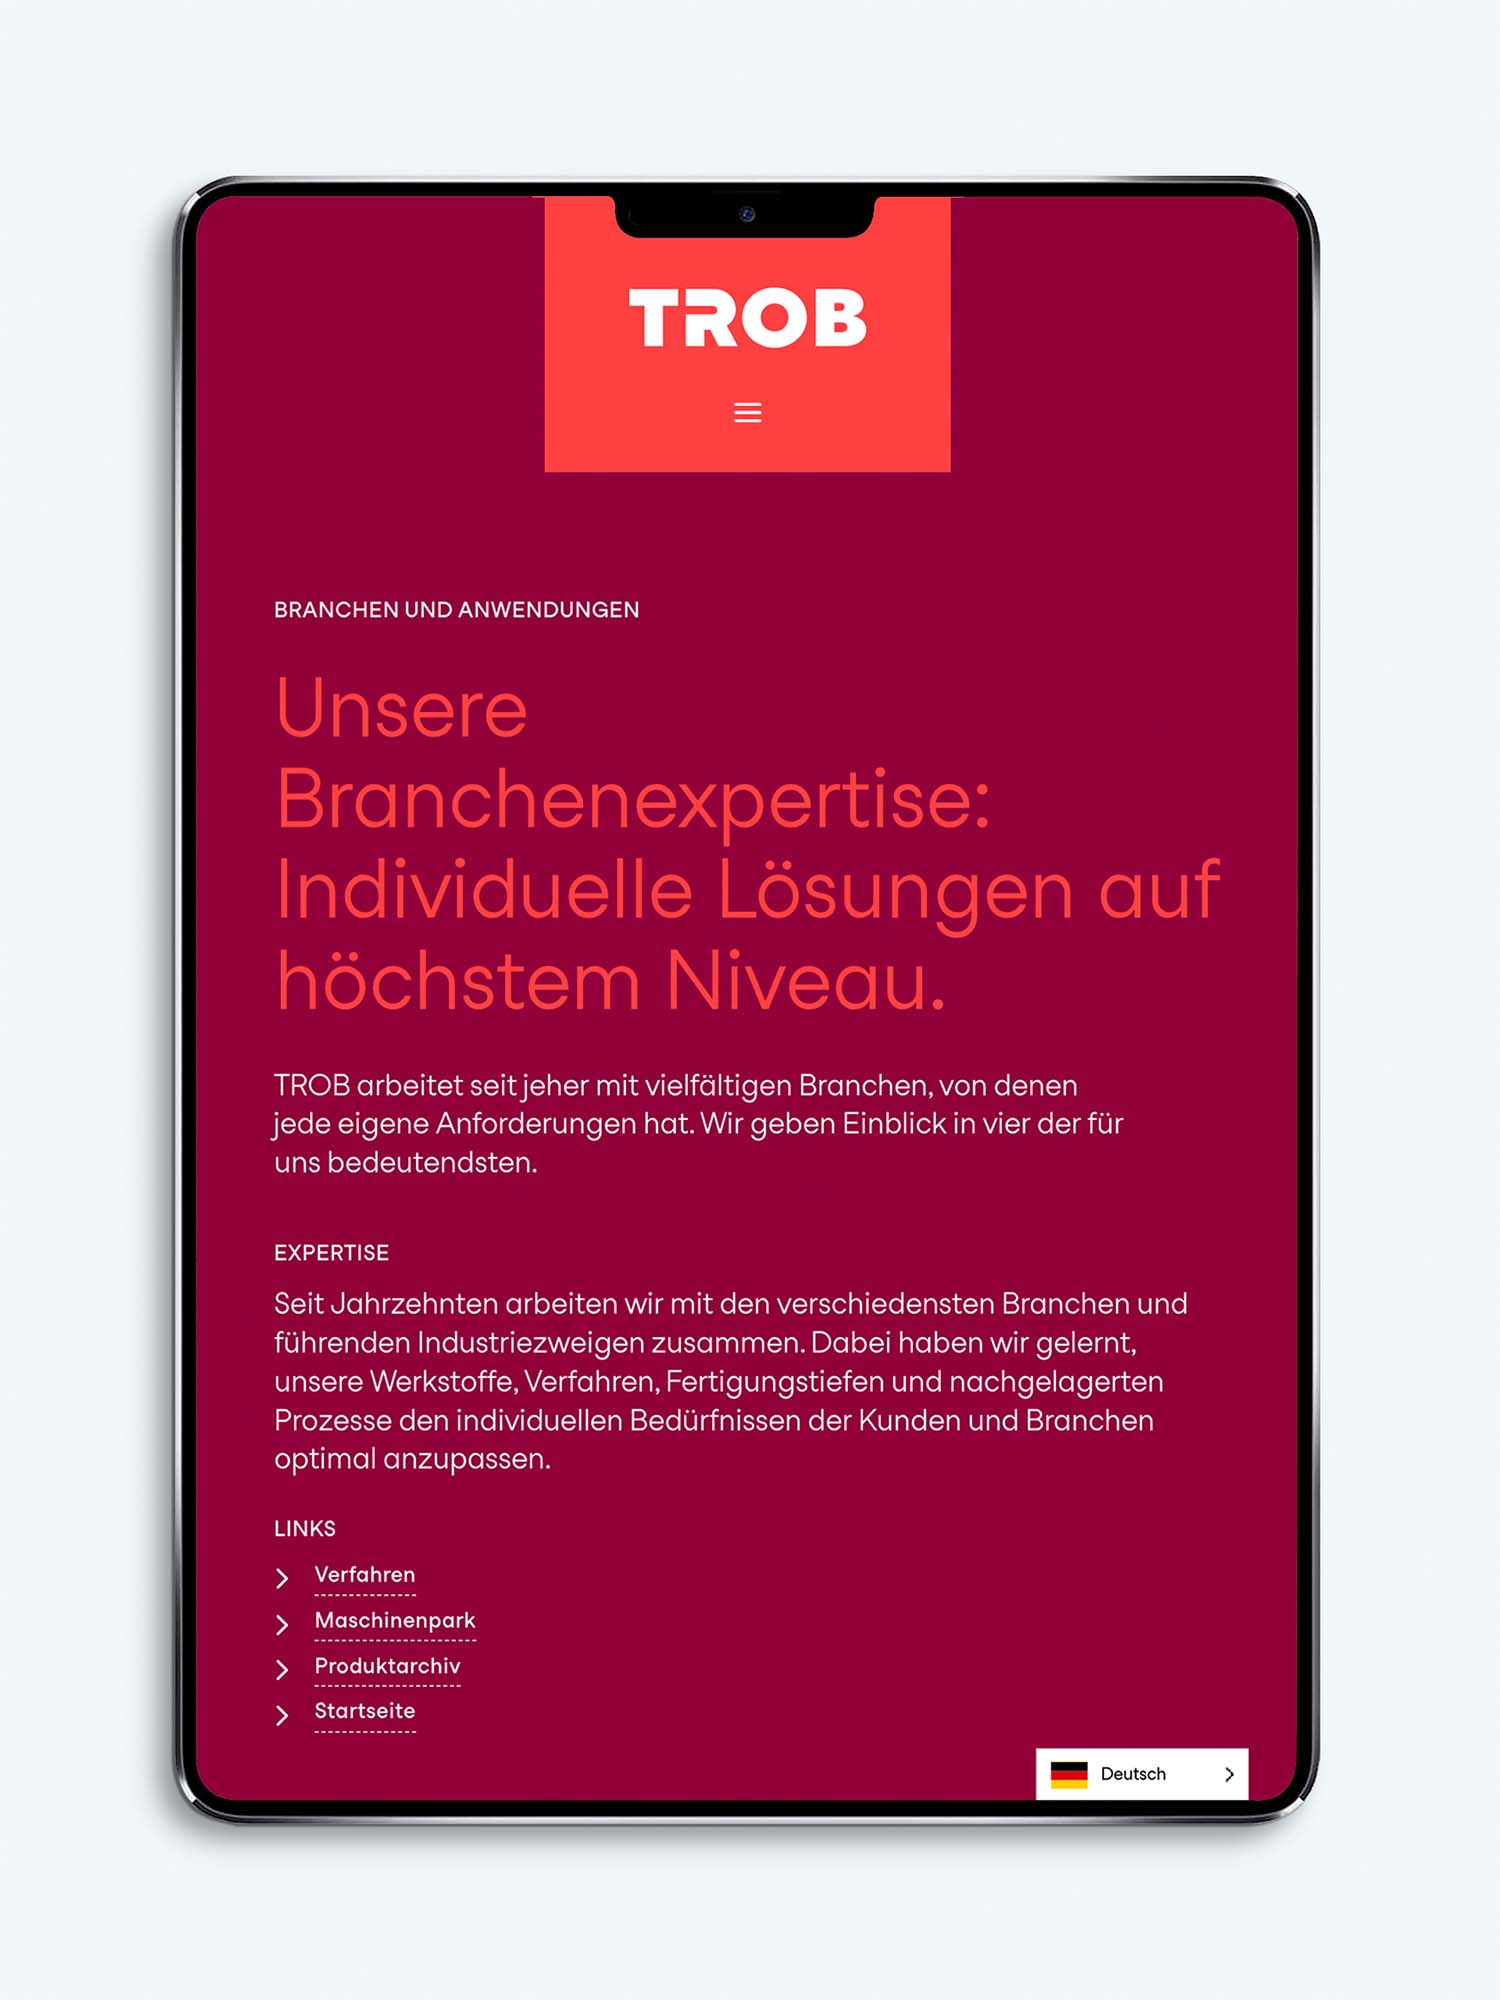 Website design of the customer Trob on an Ipad